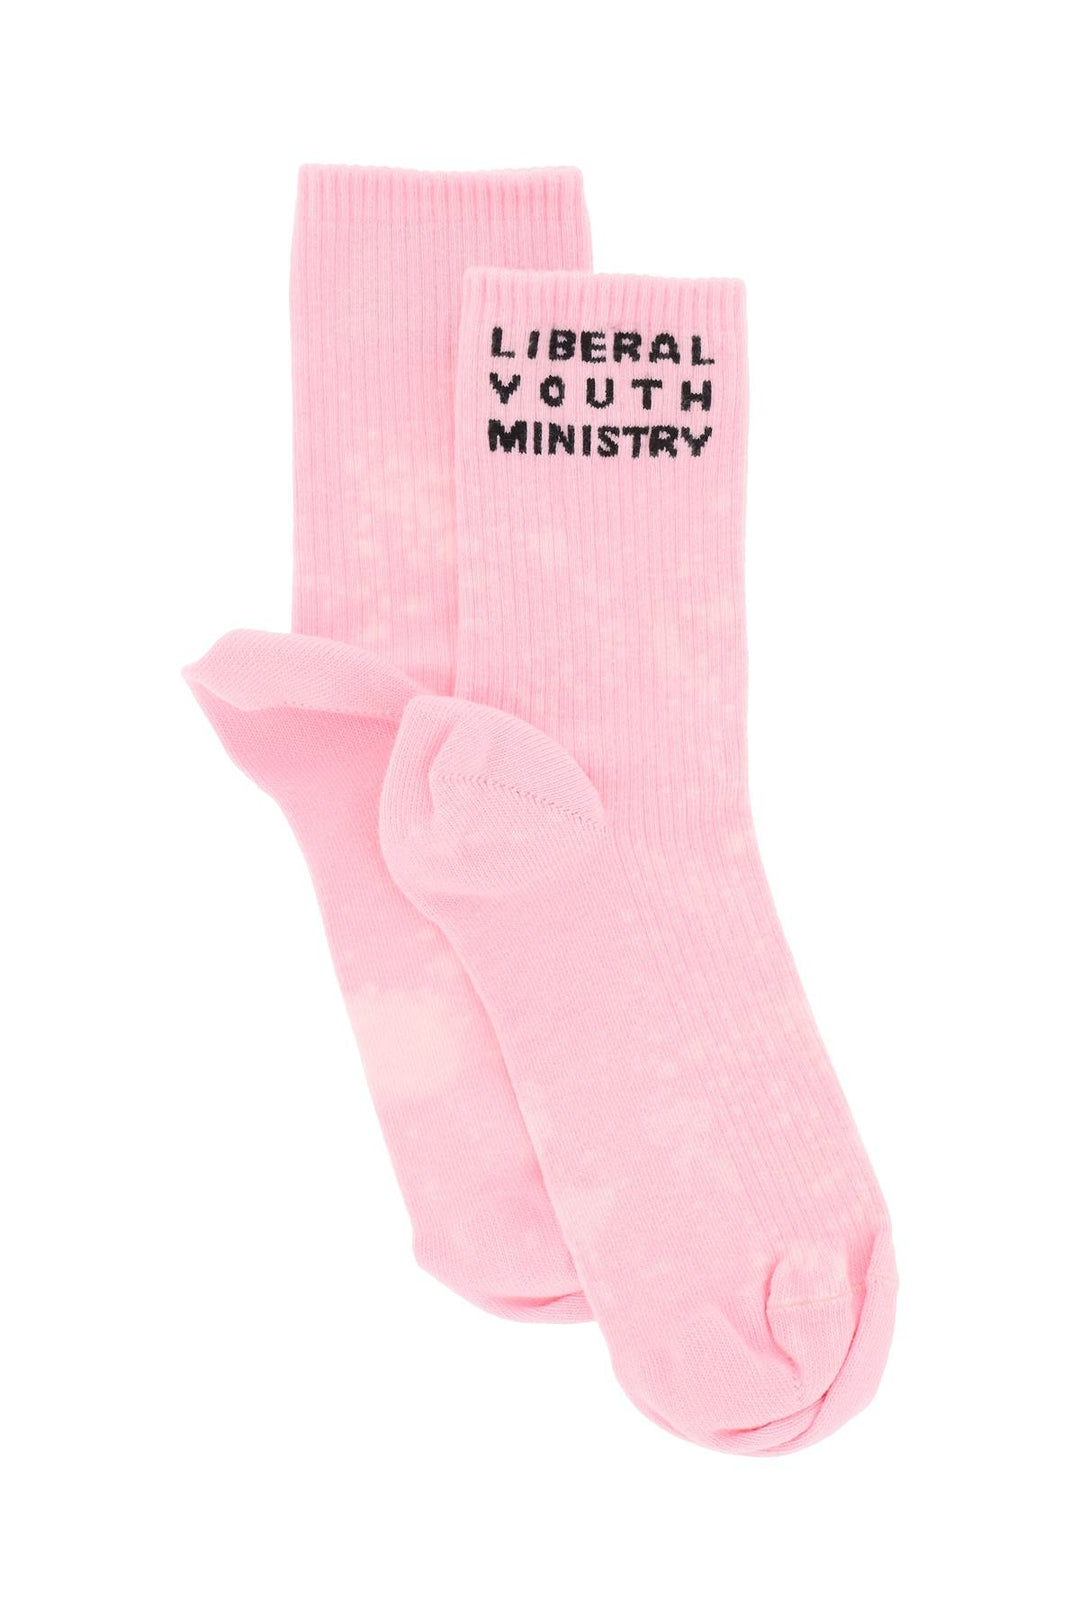 Liberal youth ministry logo sport socks-0